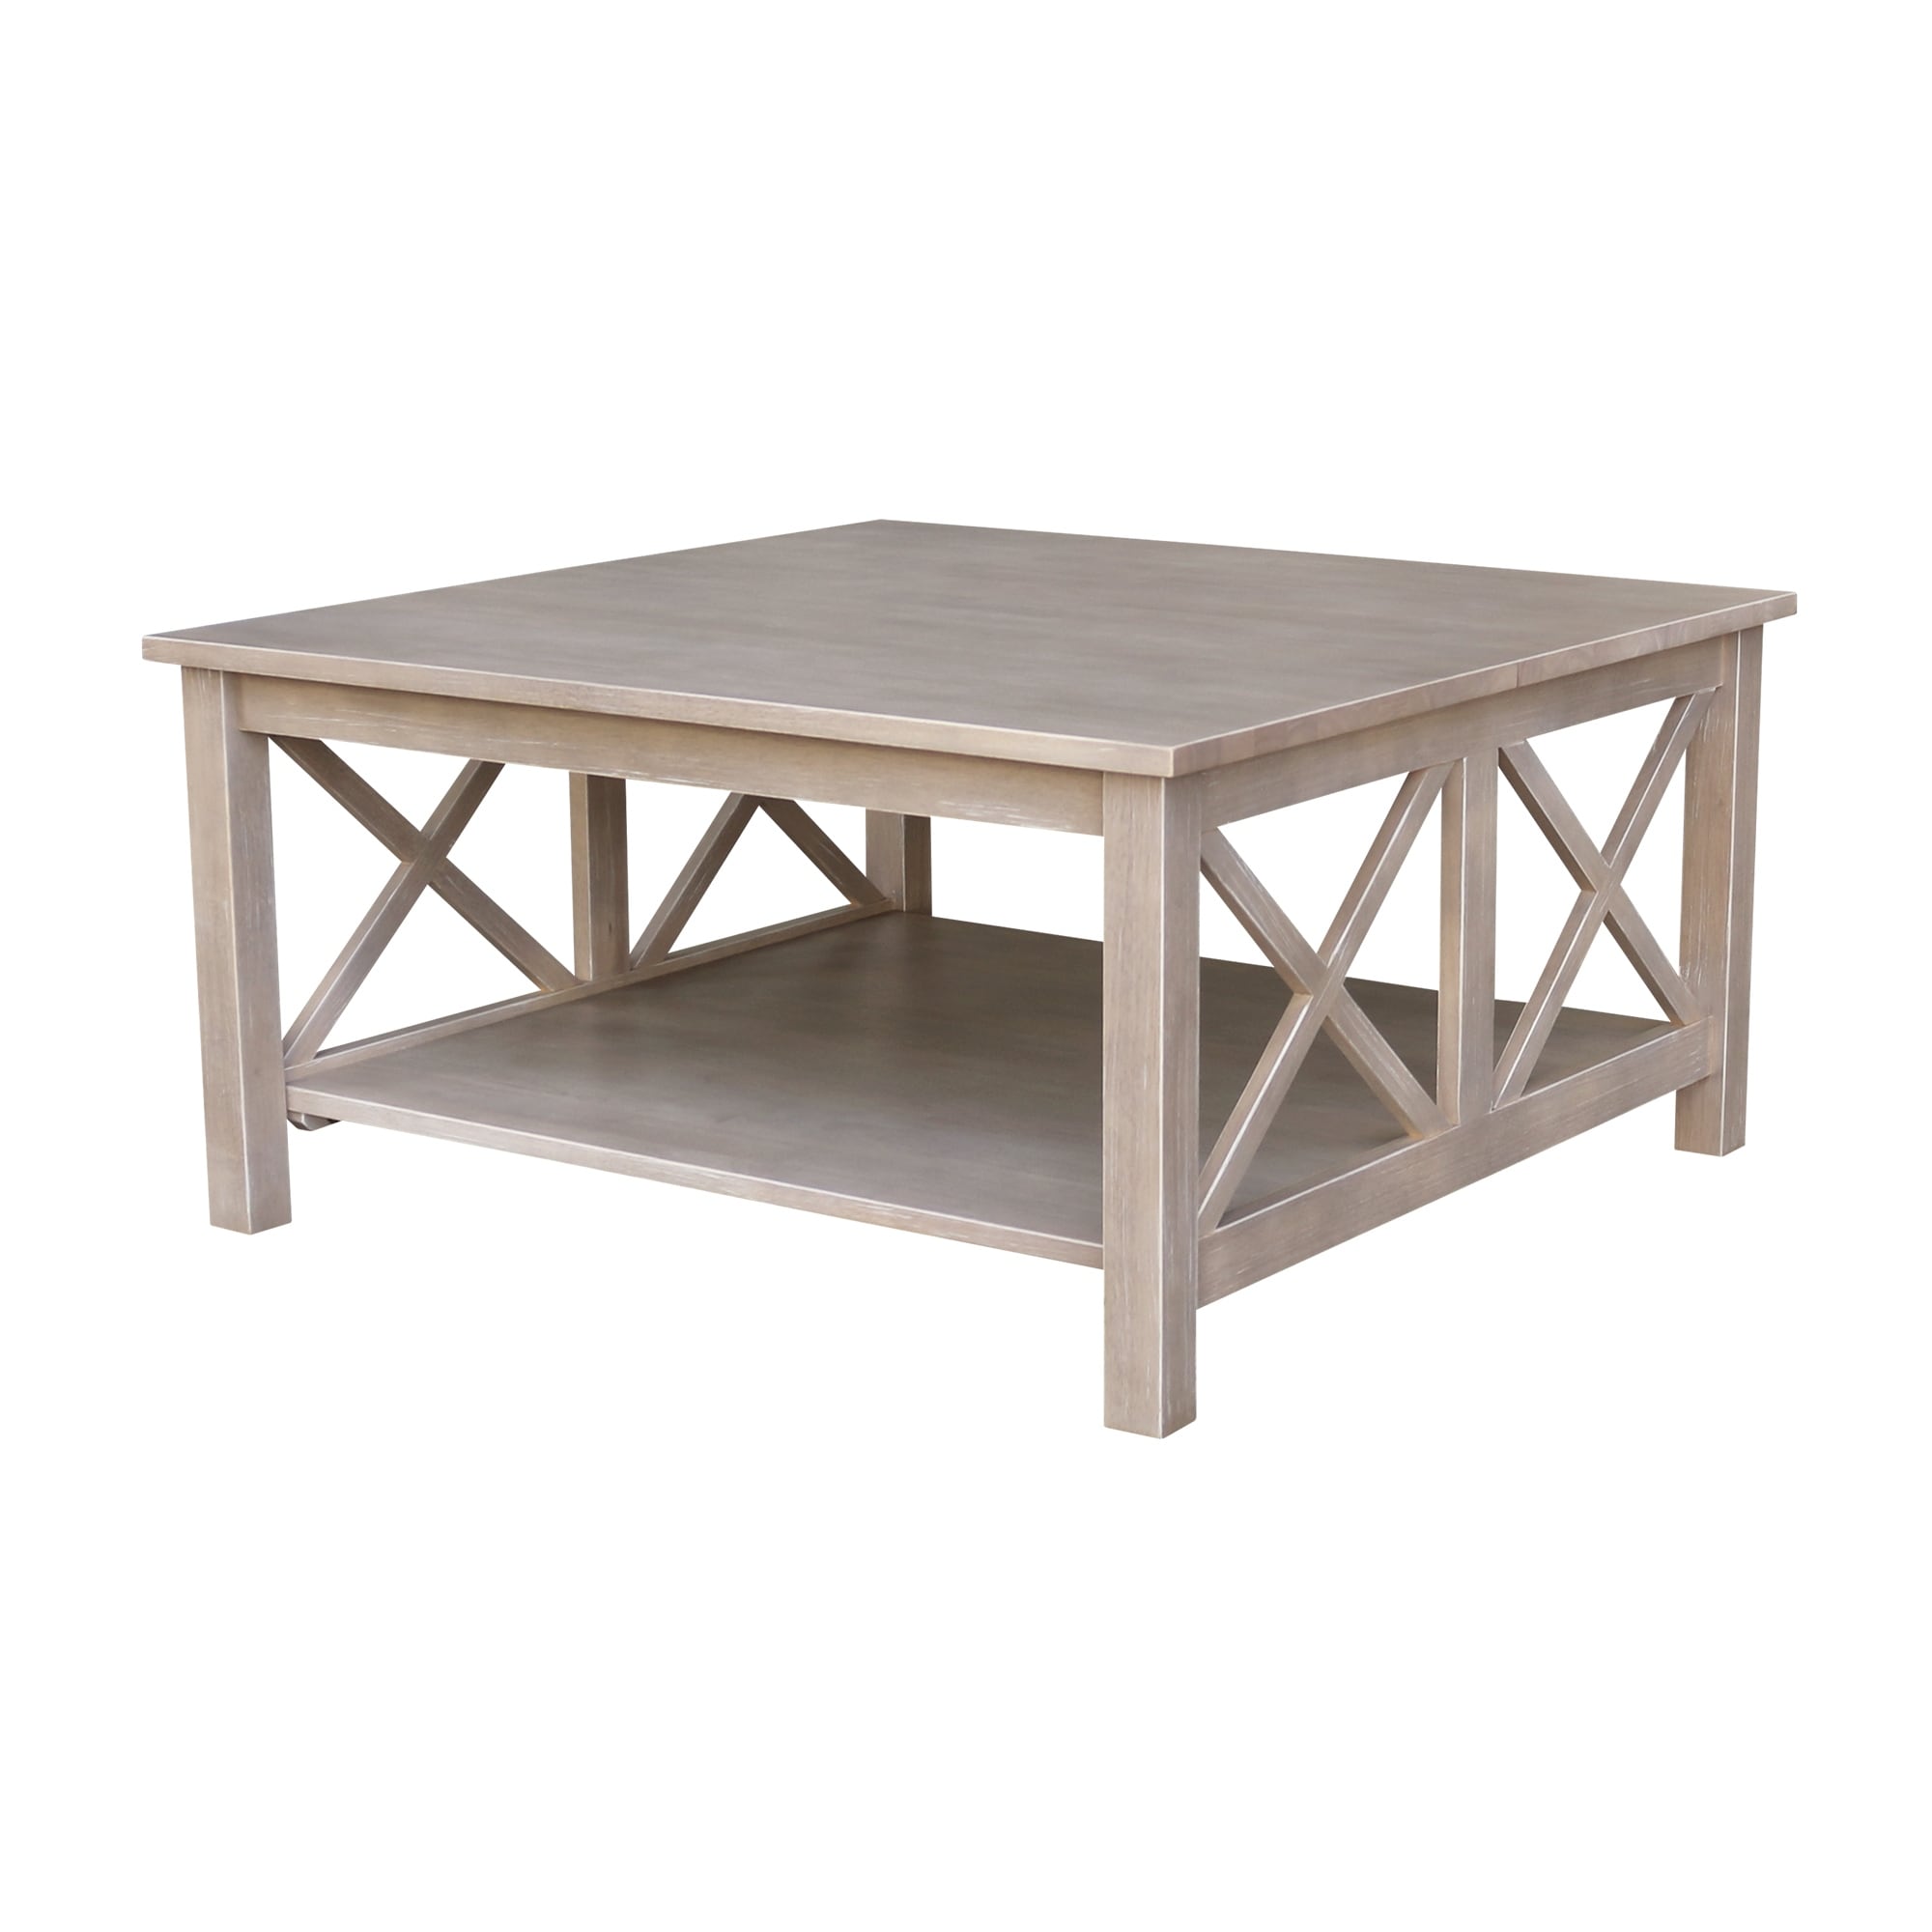 Hampton Solid Hardwood Square Coffee Table 36 X 36 36 X 36 On Sale Overstock 9330439